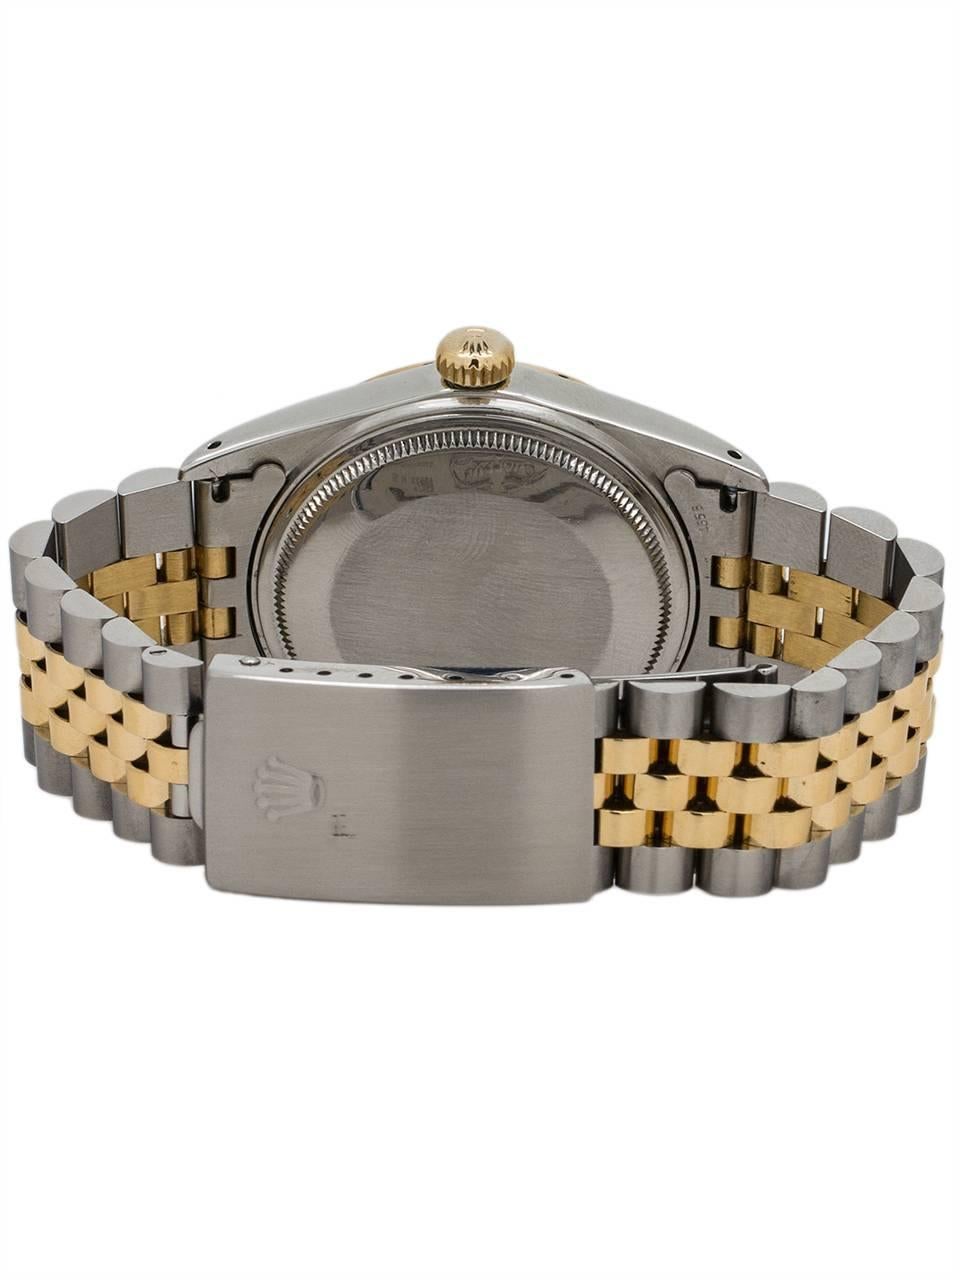 Men's Rolex Yellow Gold Stainless Steel Datejust Ref 16013 Self Winding Wristwatch